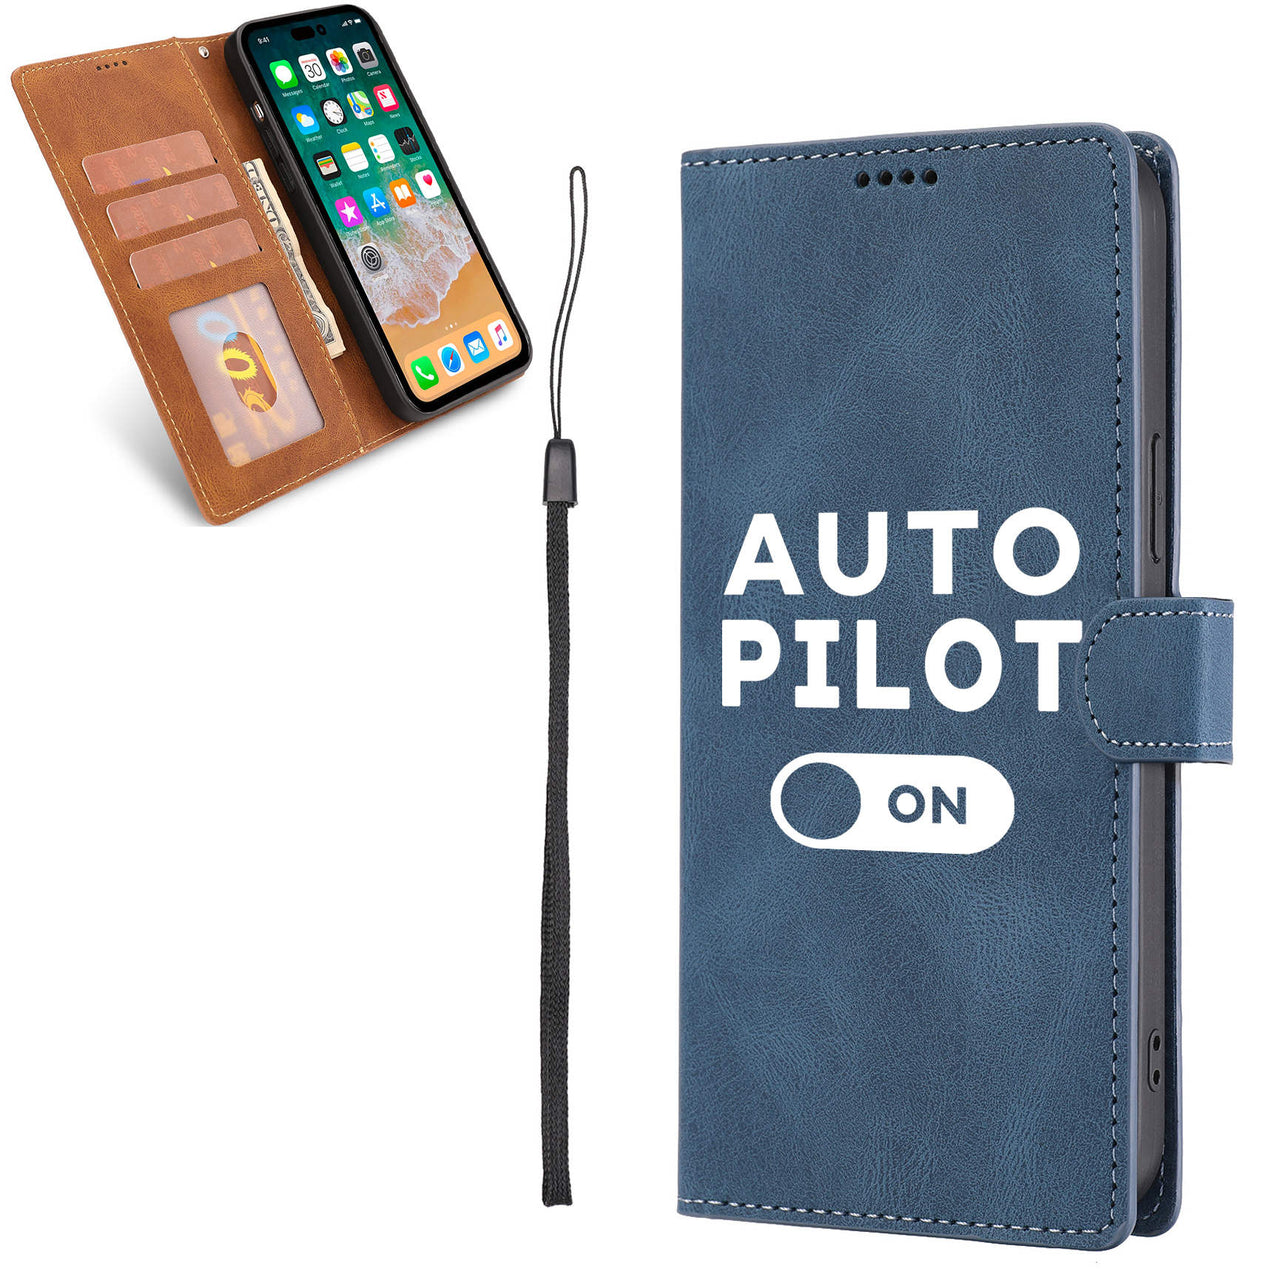 Auto Pilot ON Designed Leather iPhone Cases